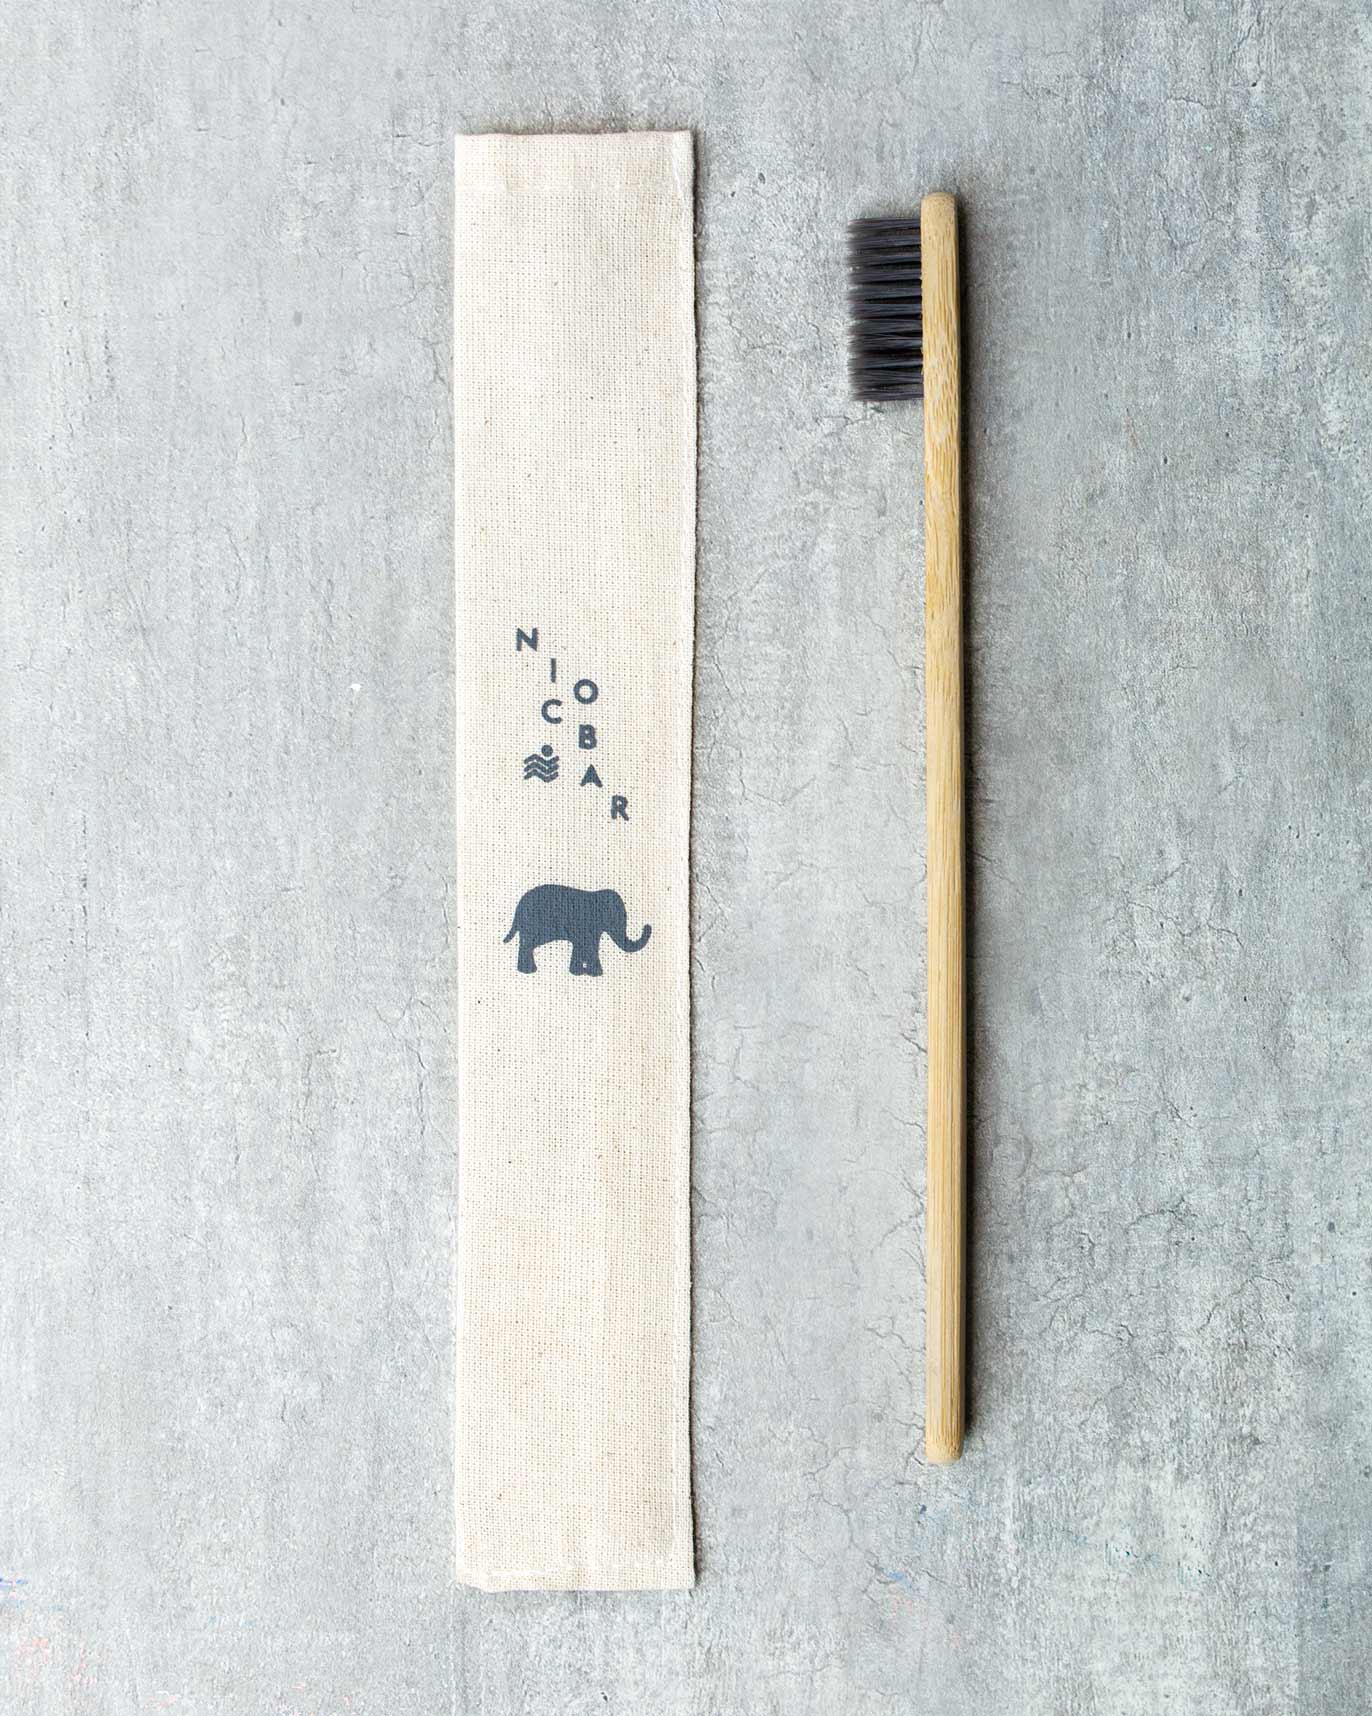 Bamboo Toothbrush - Charcoal